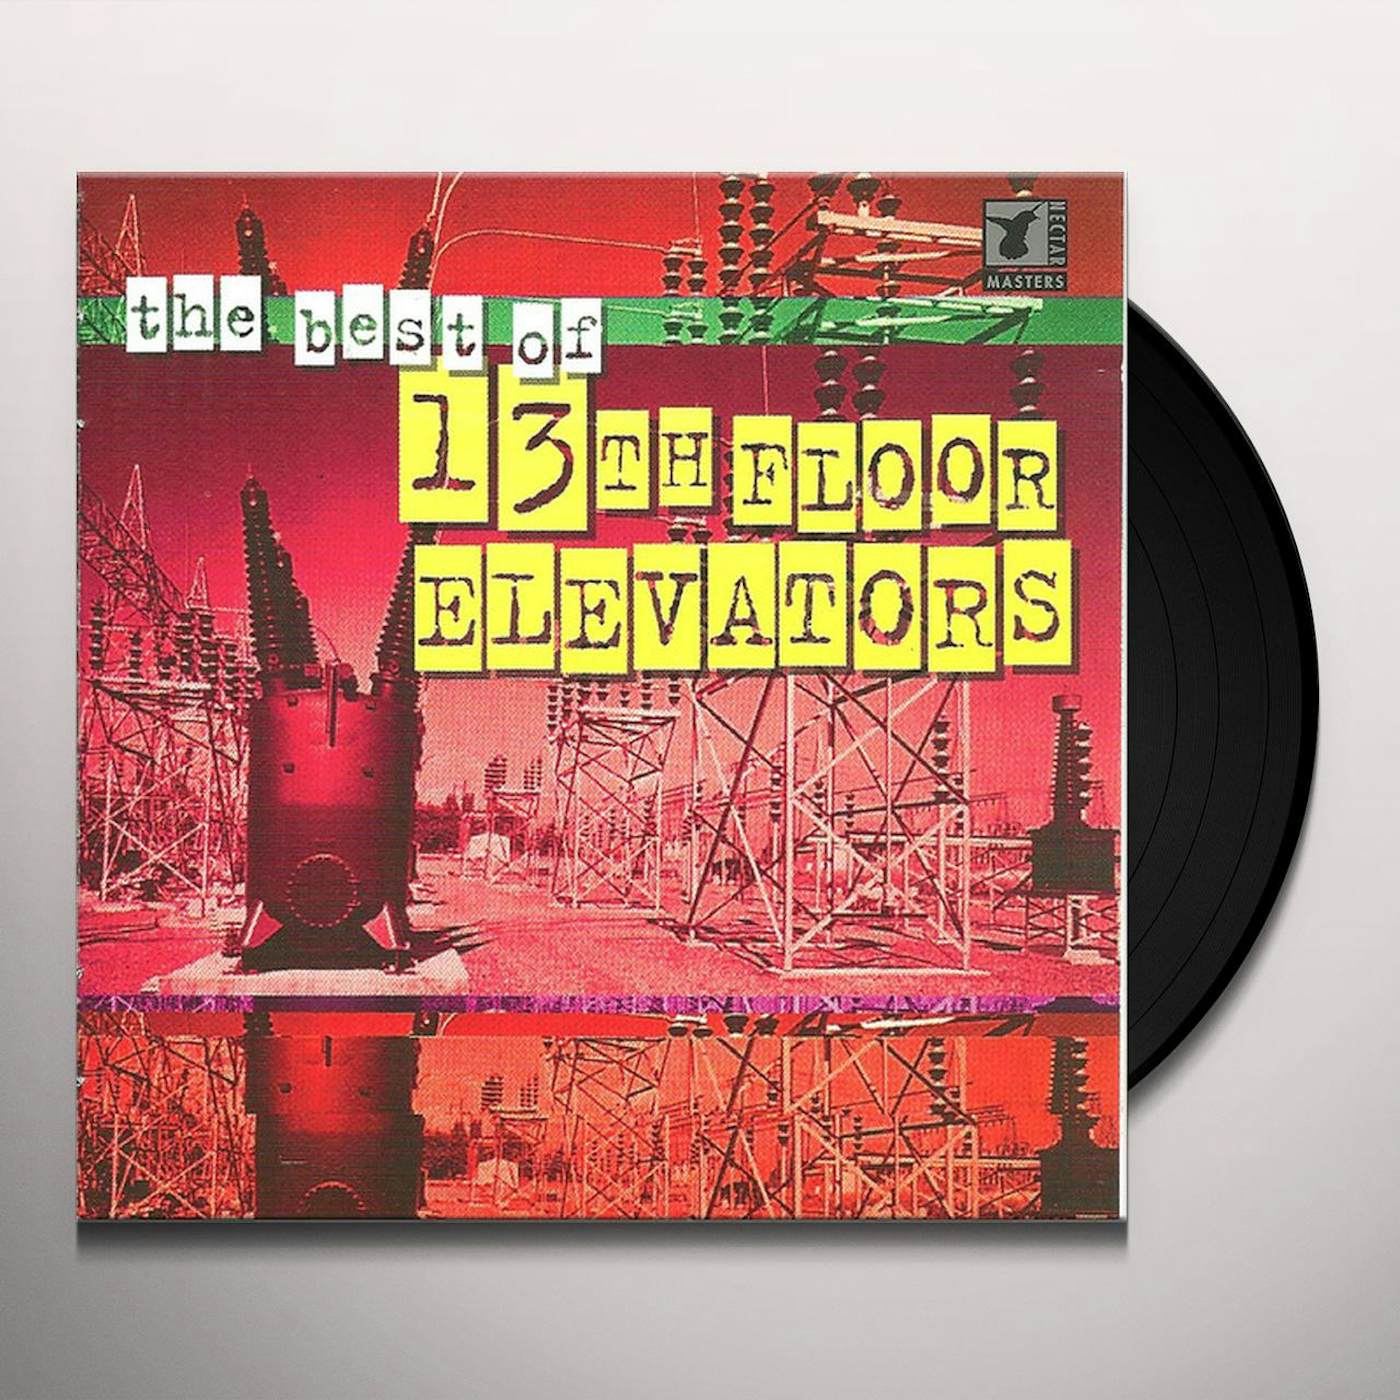 13 OF THE BEST OF THE 13TH FLOOR ELEVATORS Vinyl Record